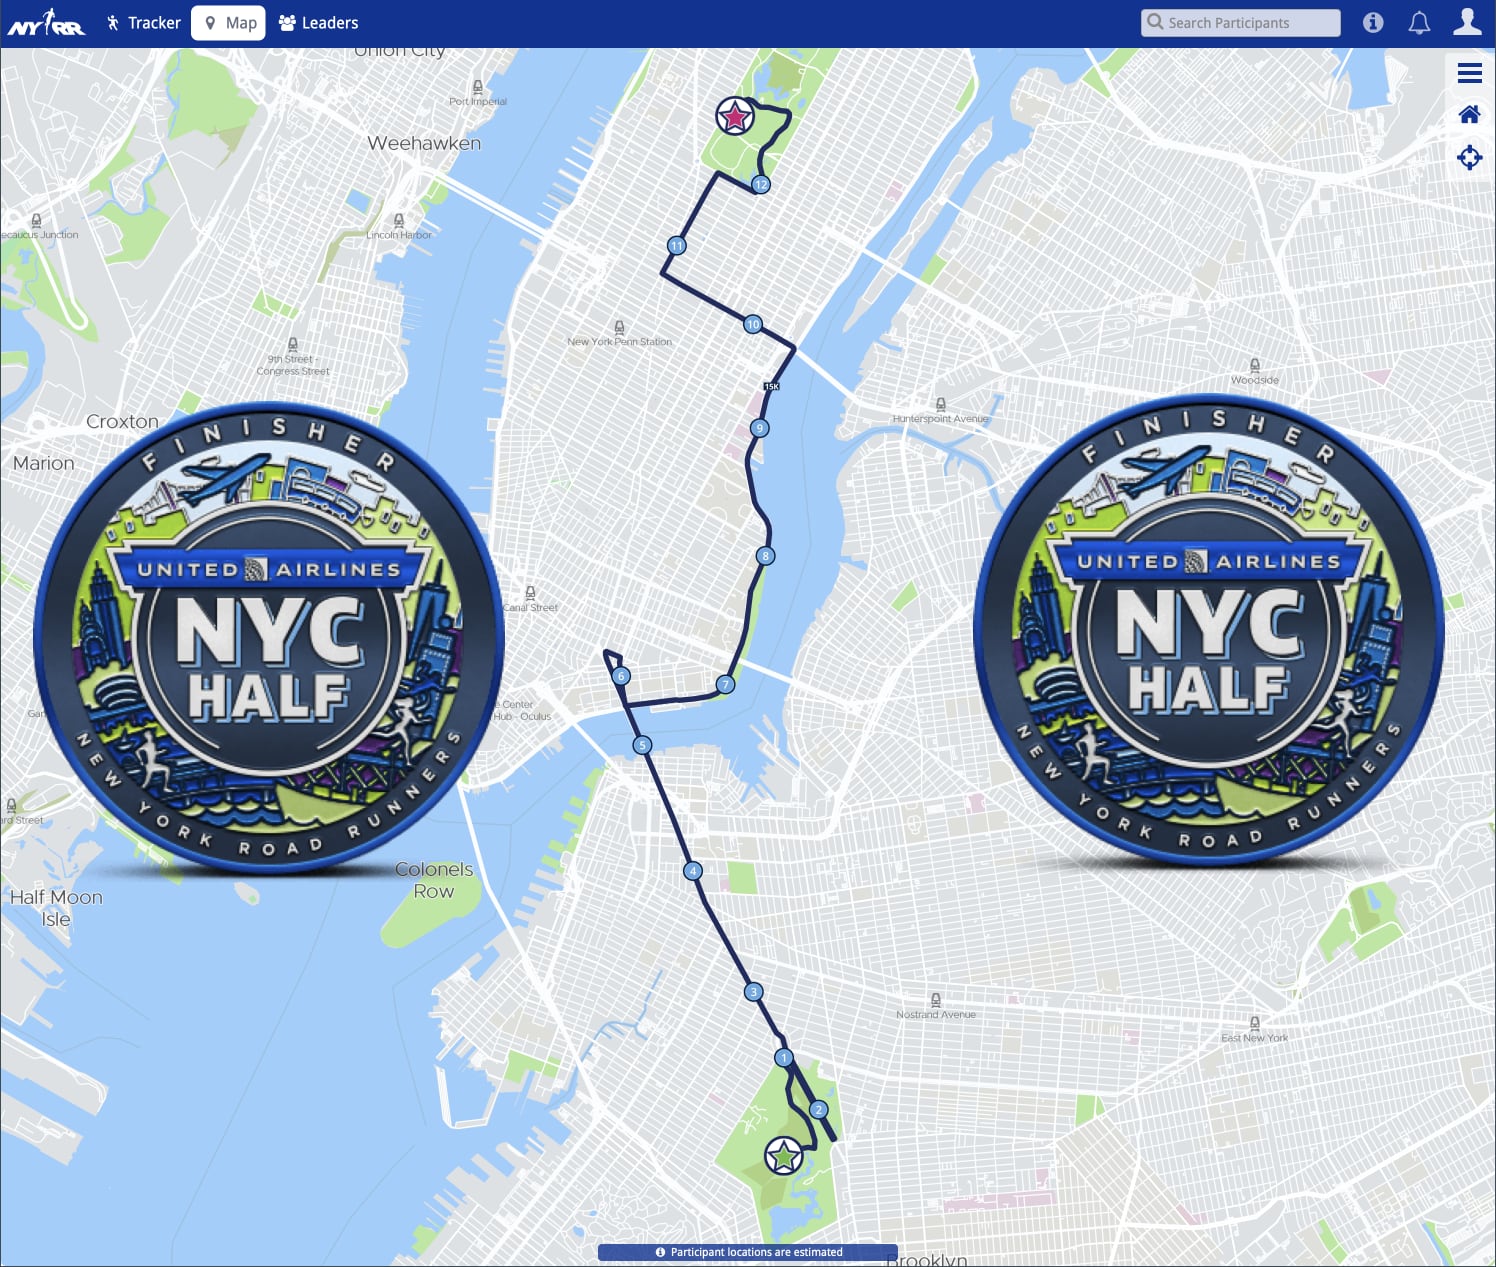 New York Road Runner NYC Half Marathon 2020 Course Map